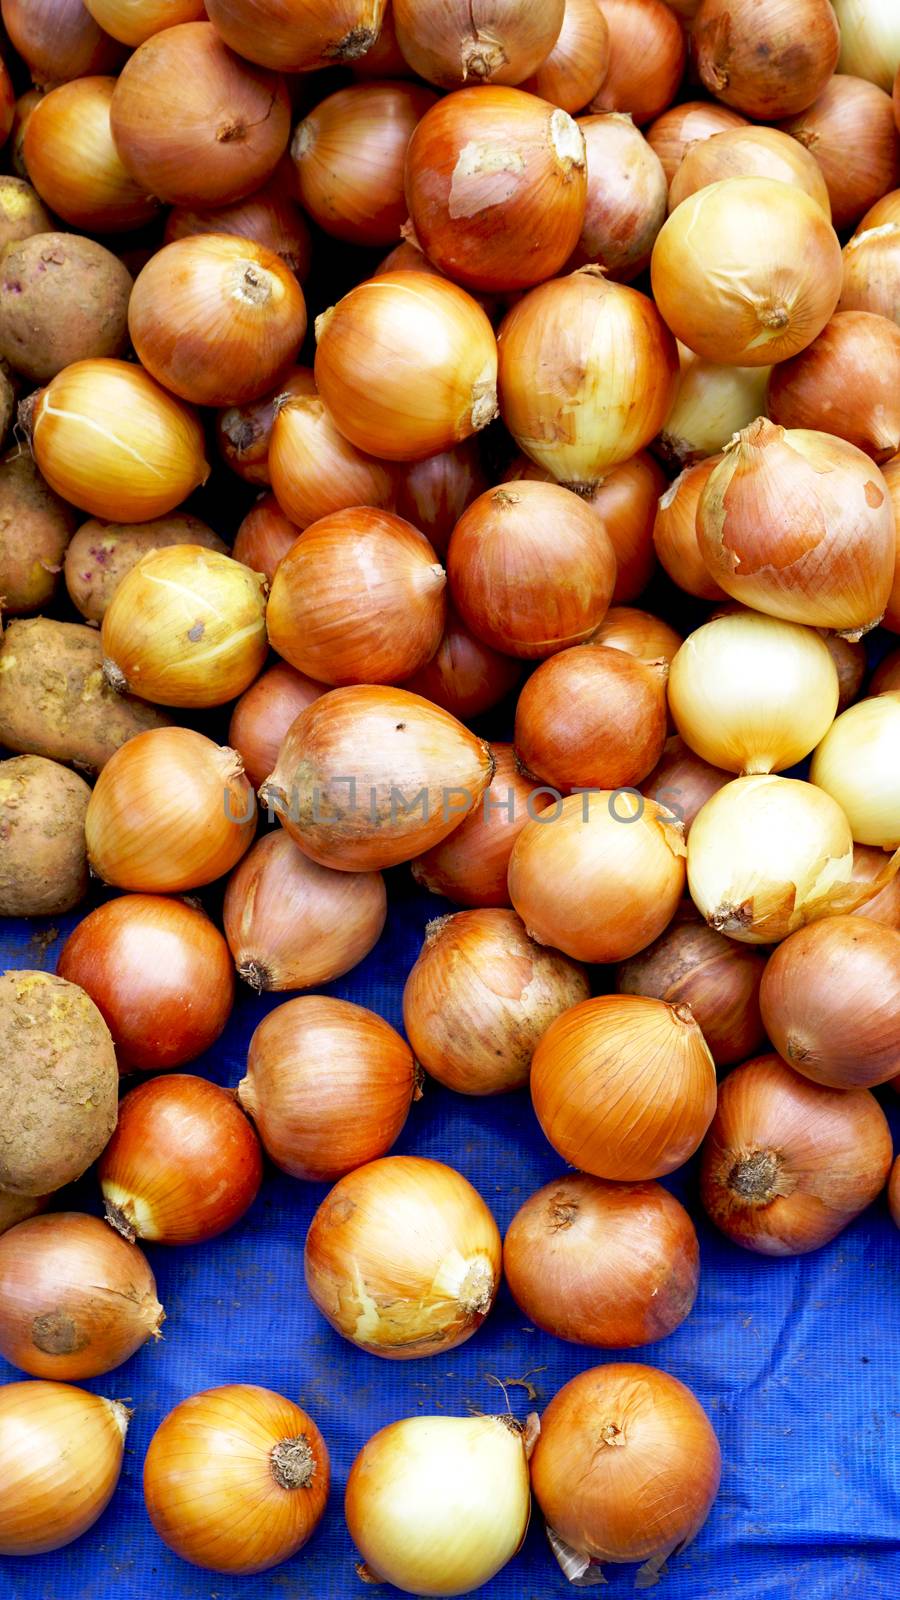 fresh onions in Local Farmer market by polarbearstudio